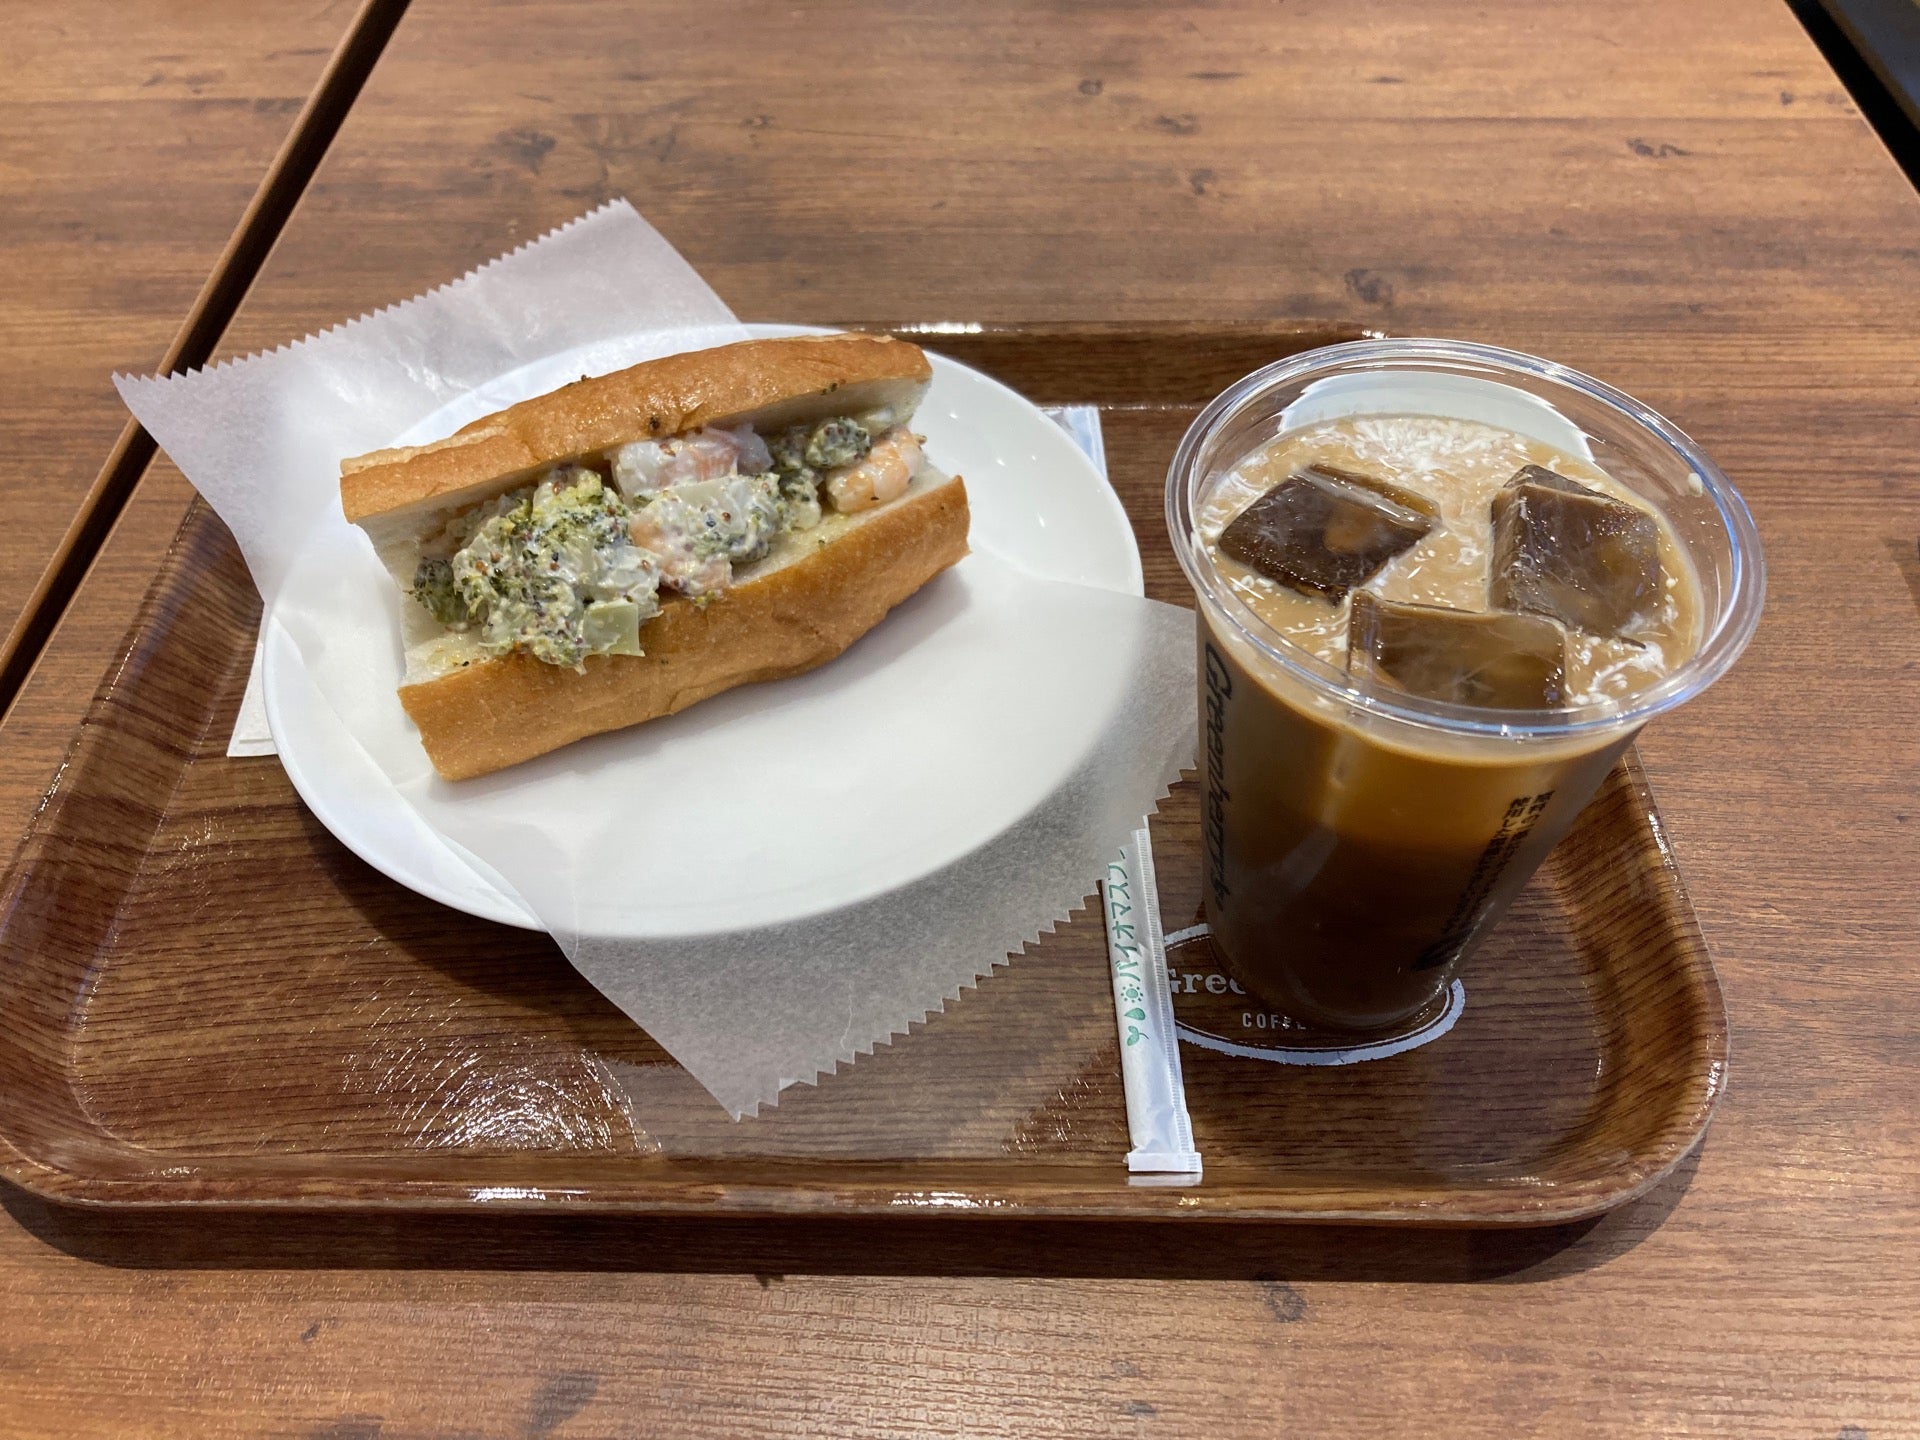 Greenberry’s COFFEE 谷町店